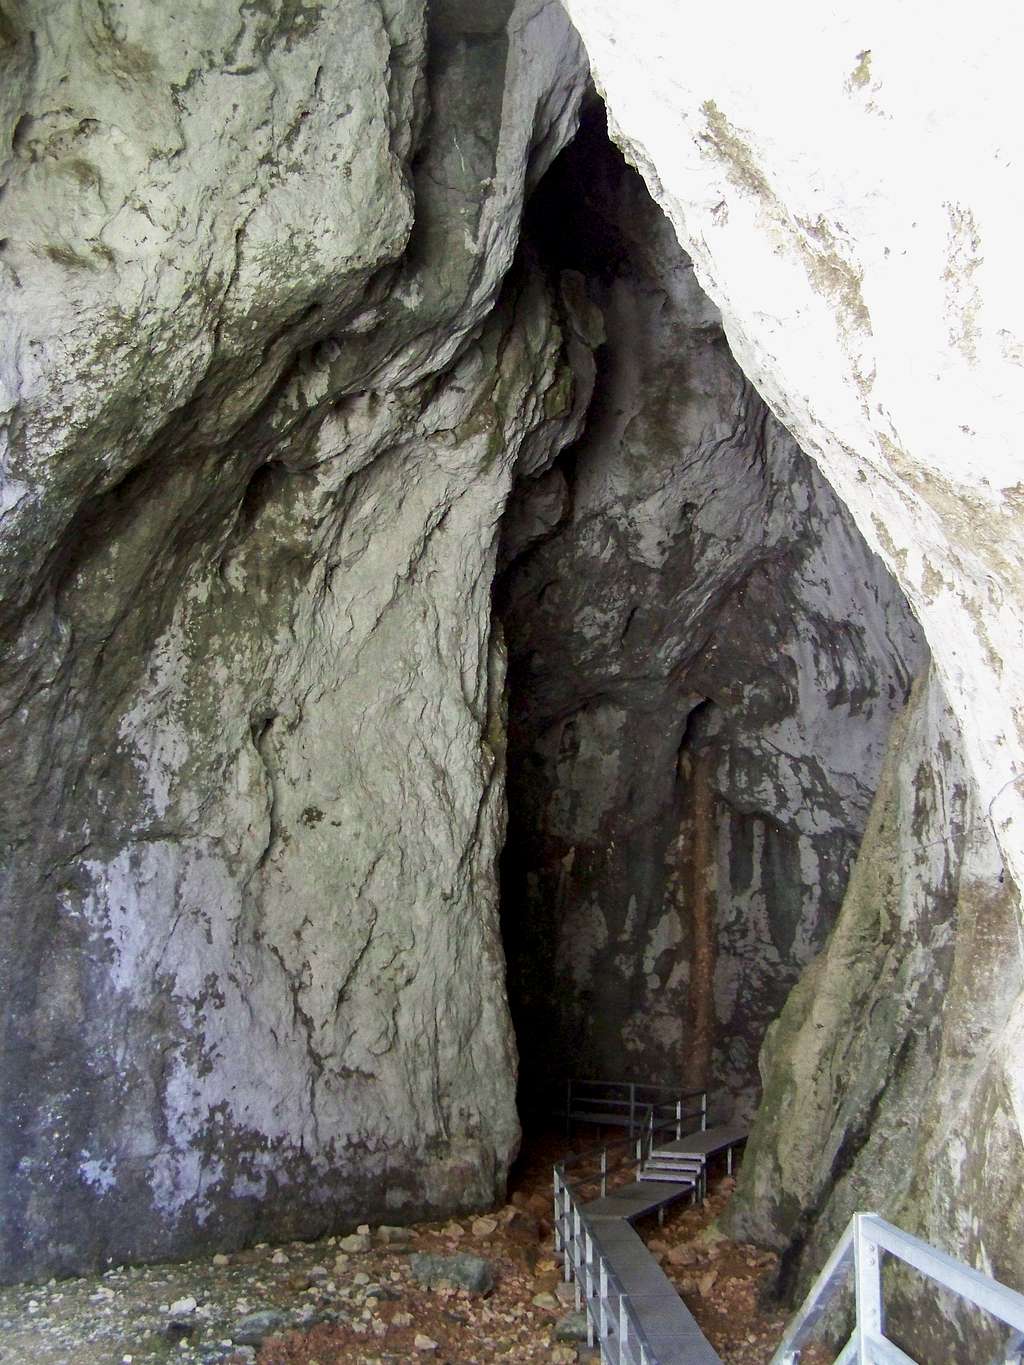 The entrance of the cave Poarta Lui Ionel